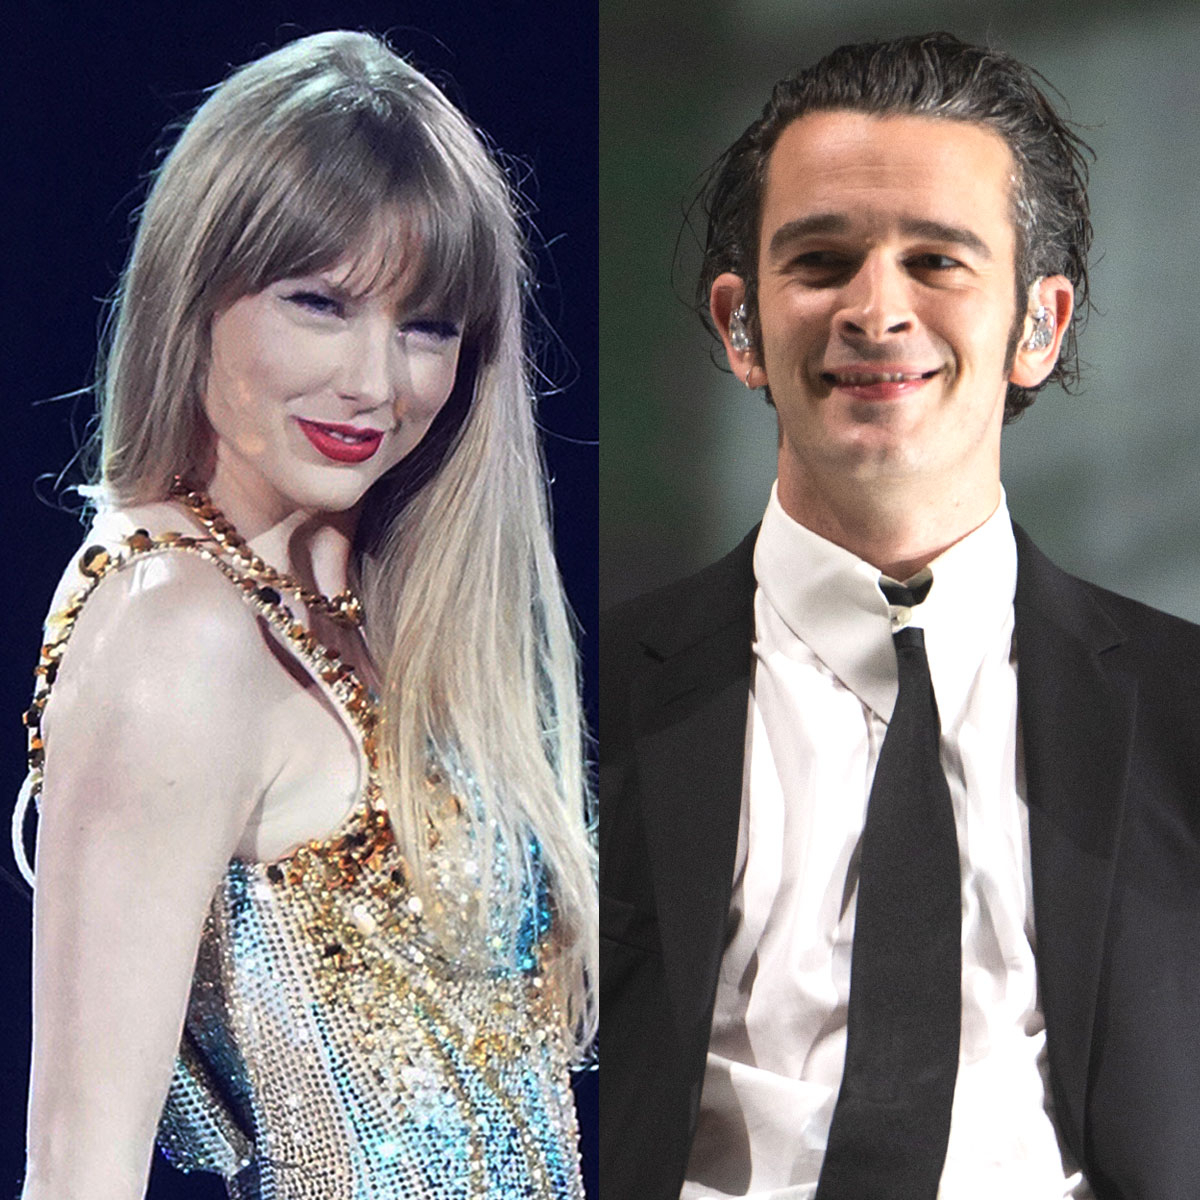 Matty Healy Attends Taylor Swift’s Eras Tour Show Amid Romance Rumors